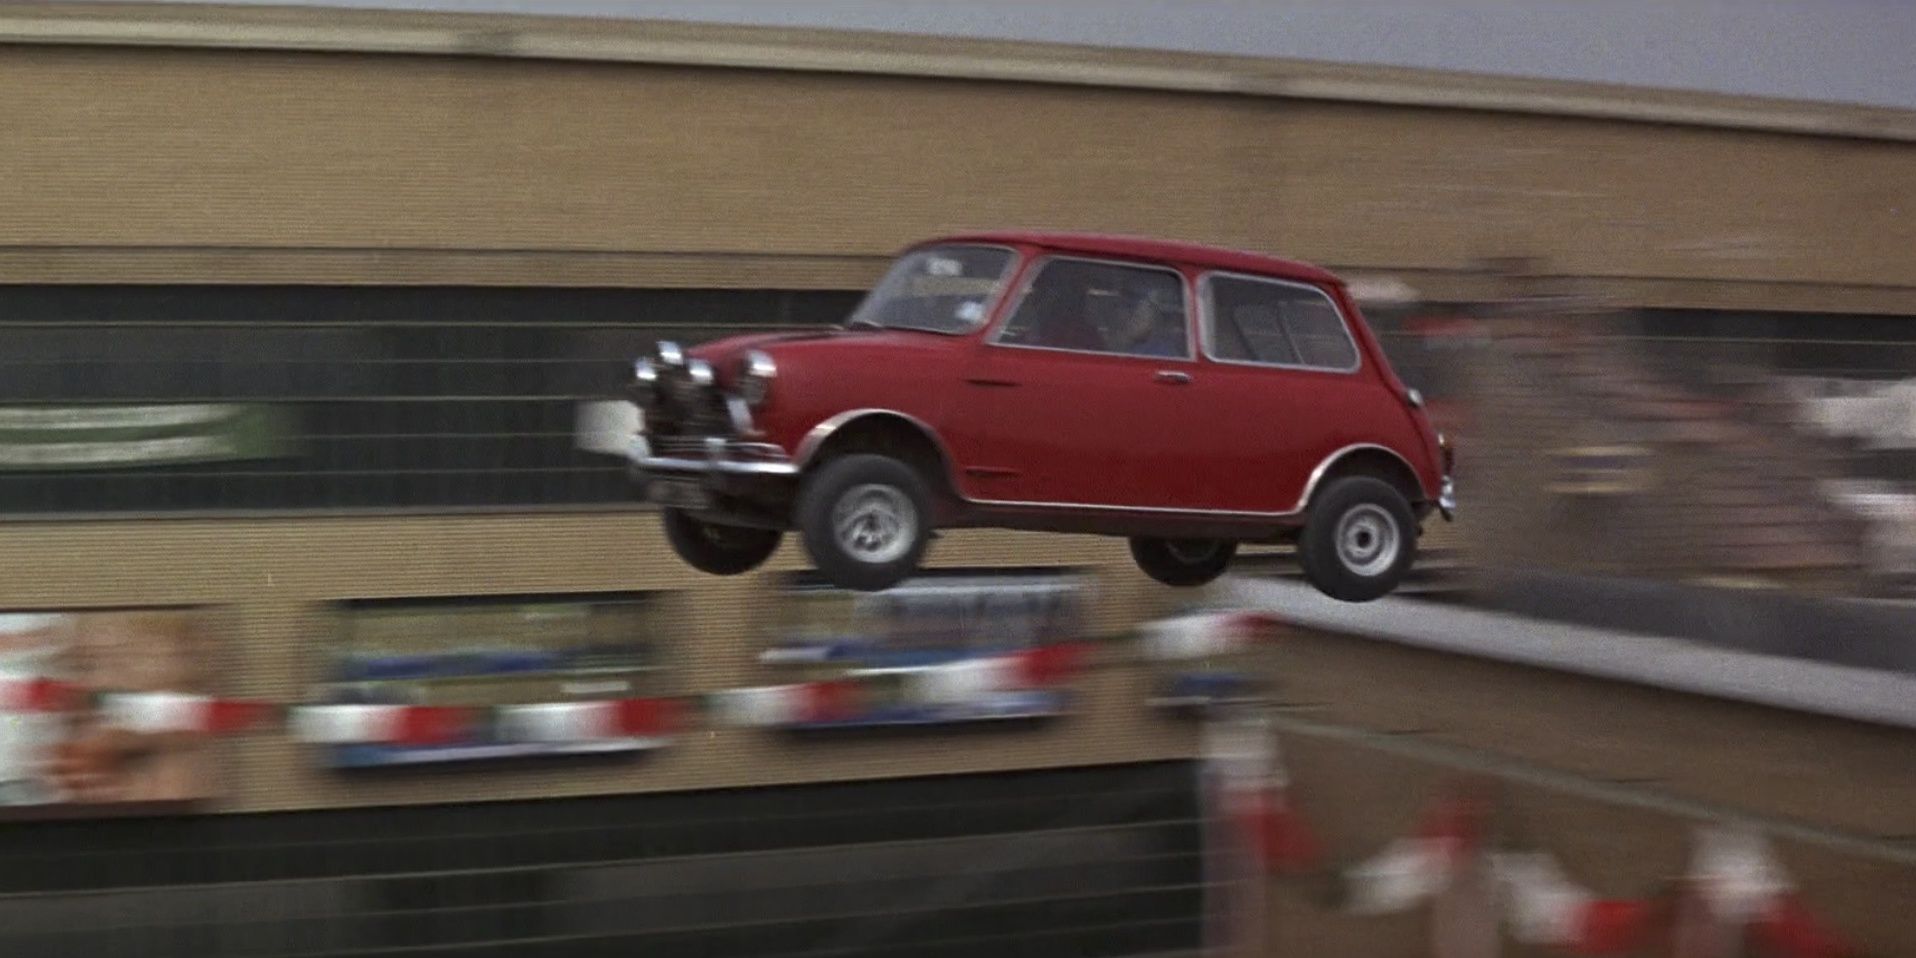 A Mini Cooper jumps over a ramp in The Italian Job